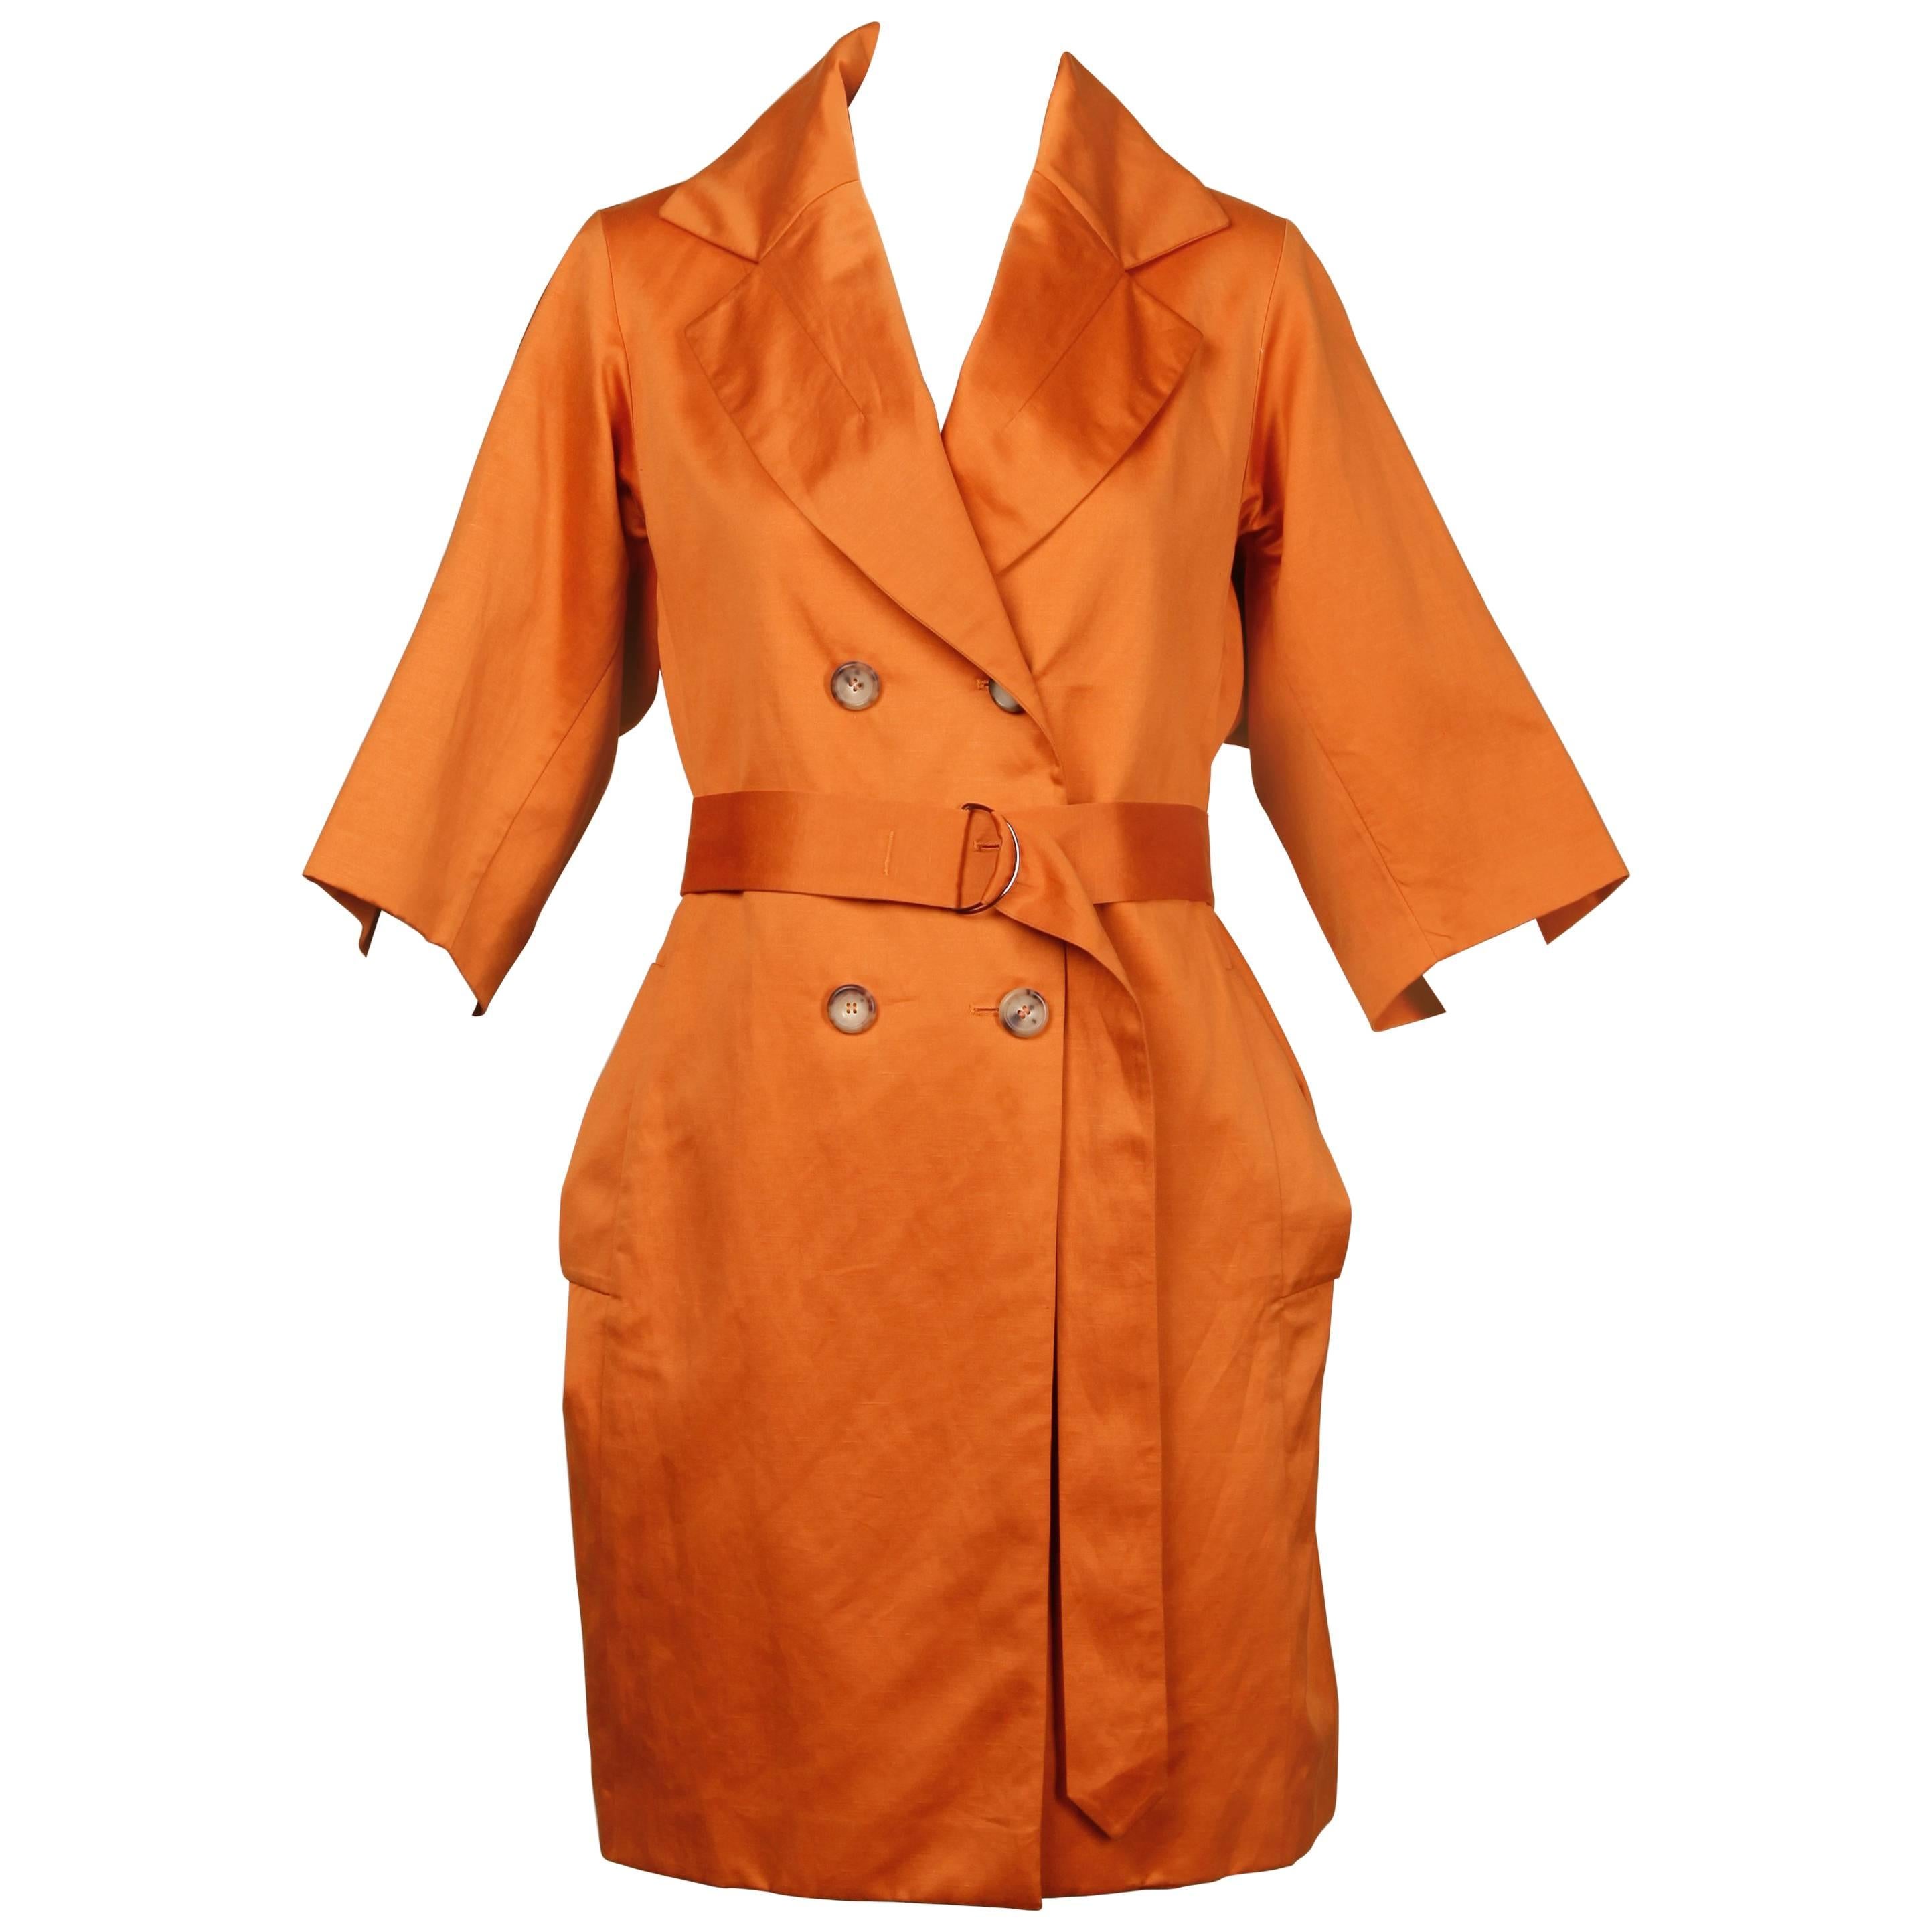 Yves Saint Laurent Rust/ Orange Fall Trench Coat Jacket